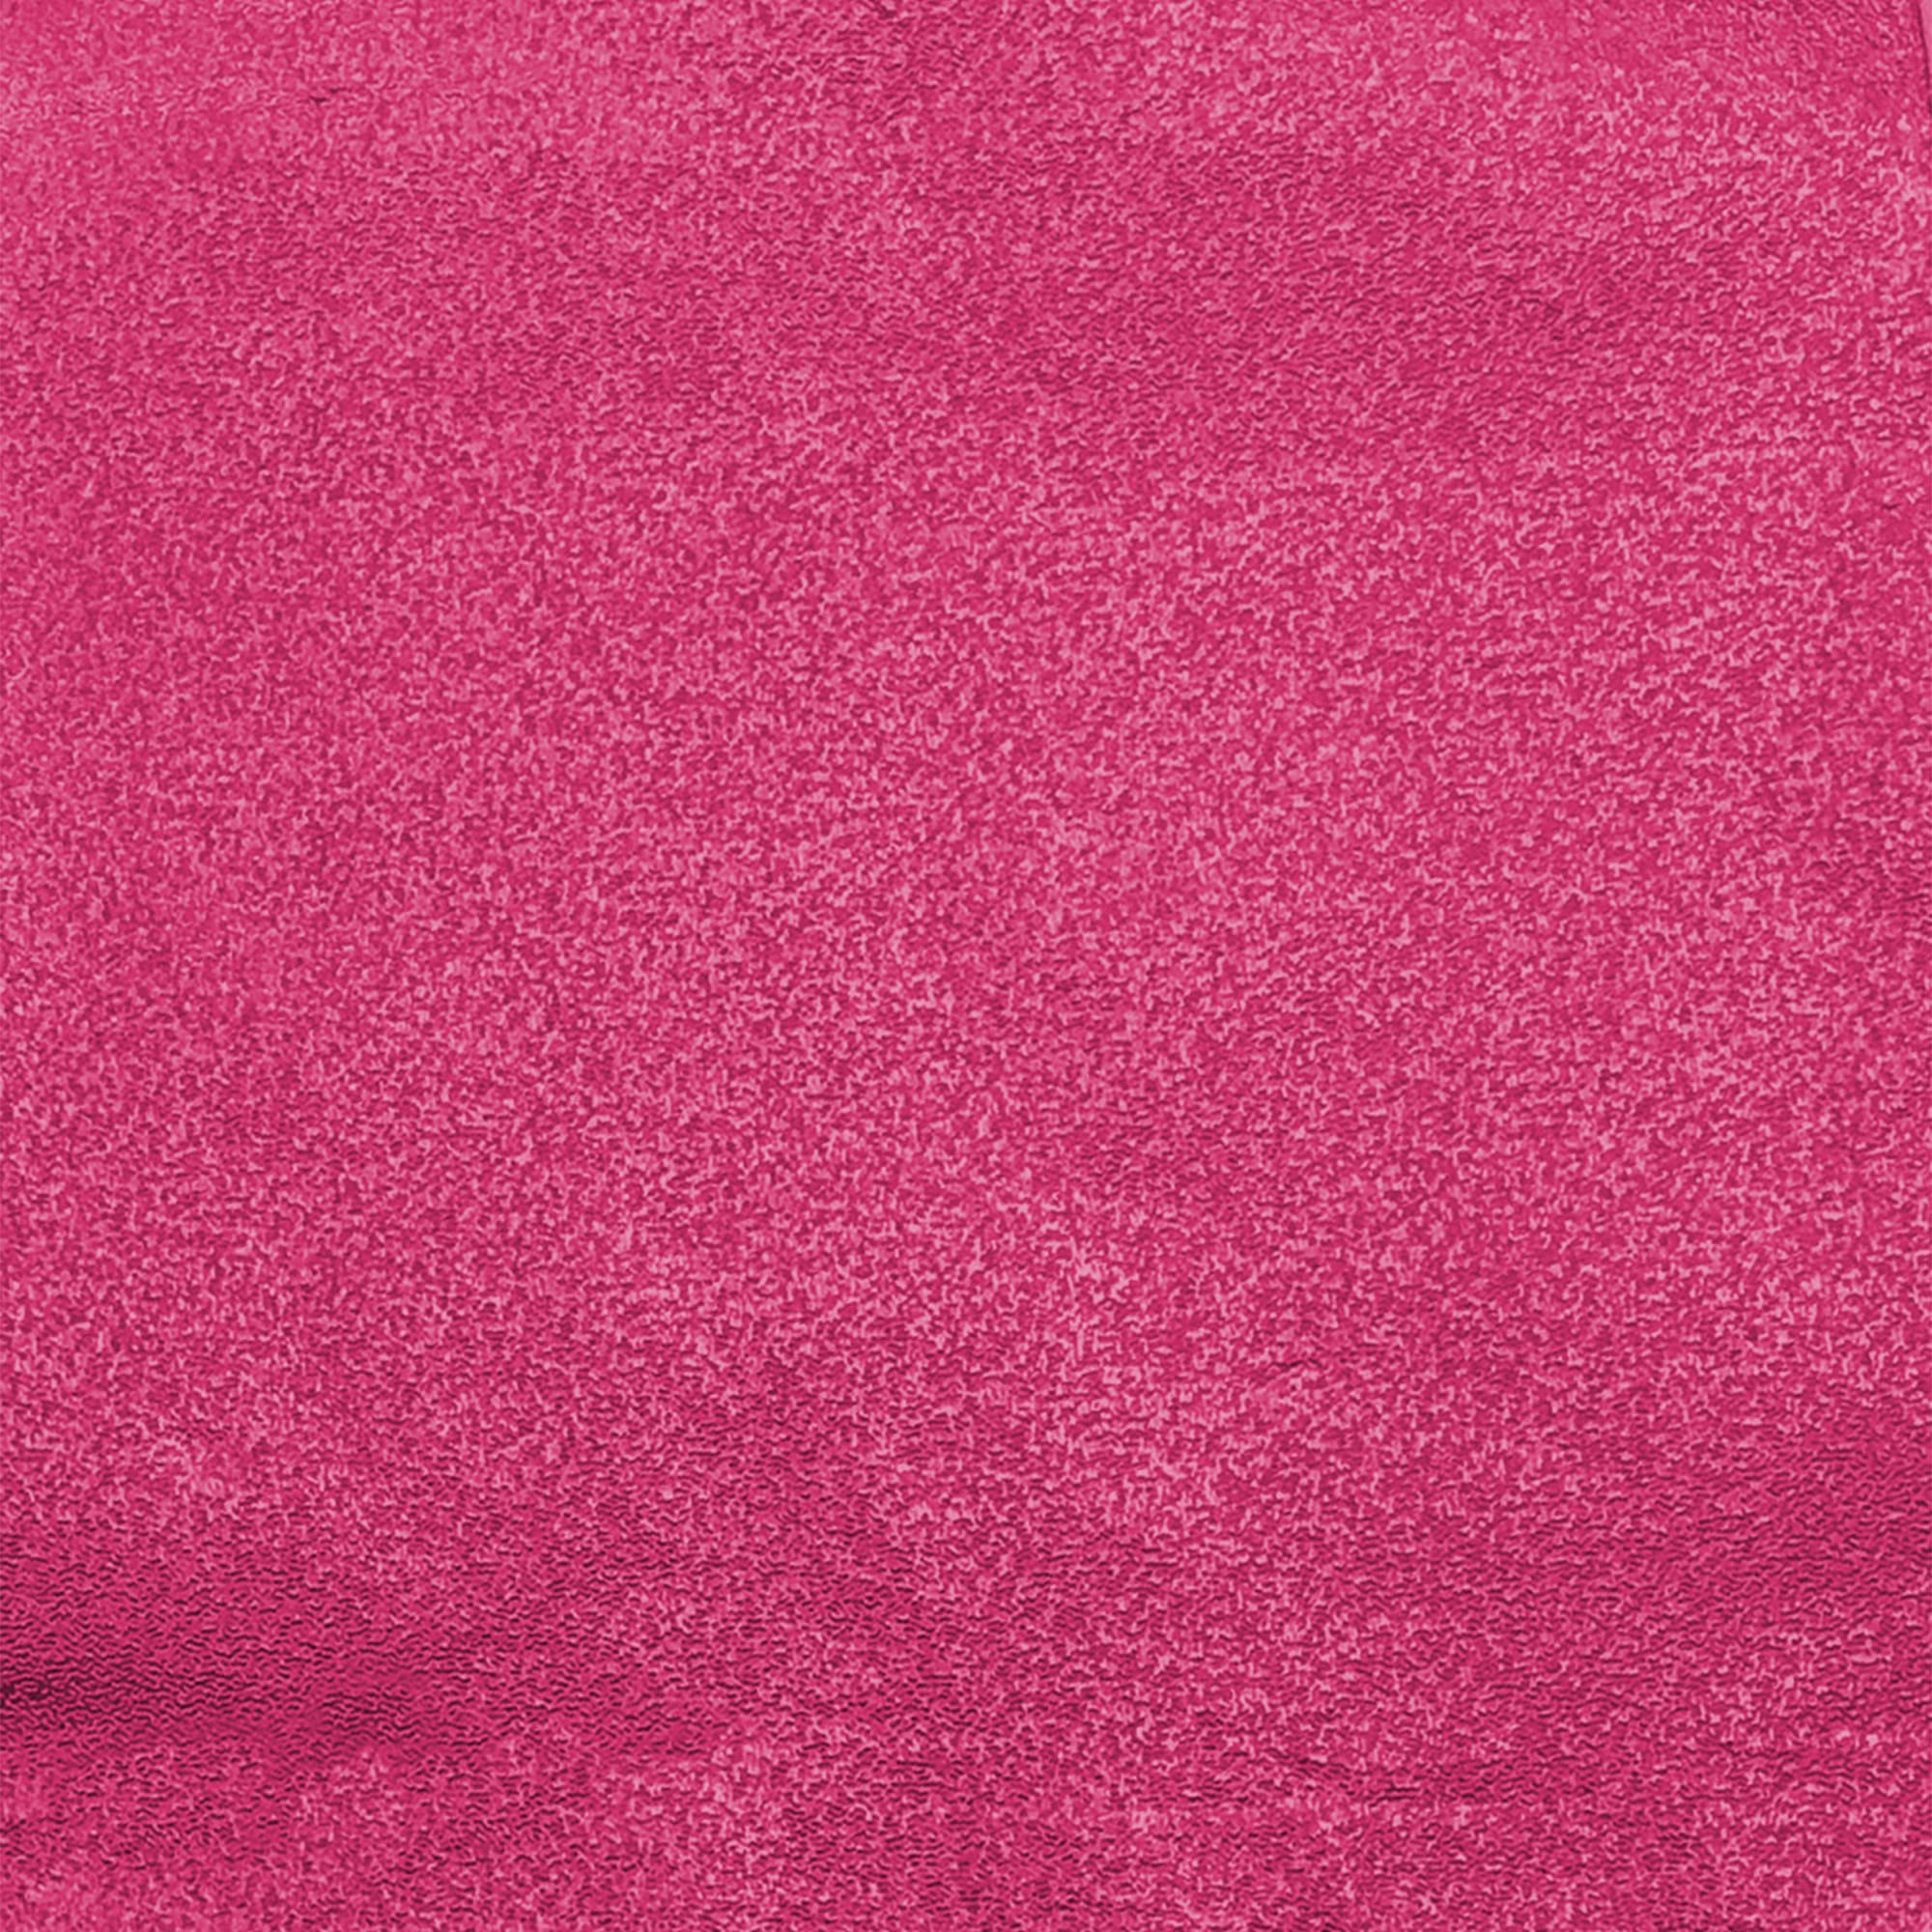 Fromm Color Studio Pop Up Hair Foil in Neon Pink, 5